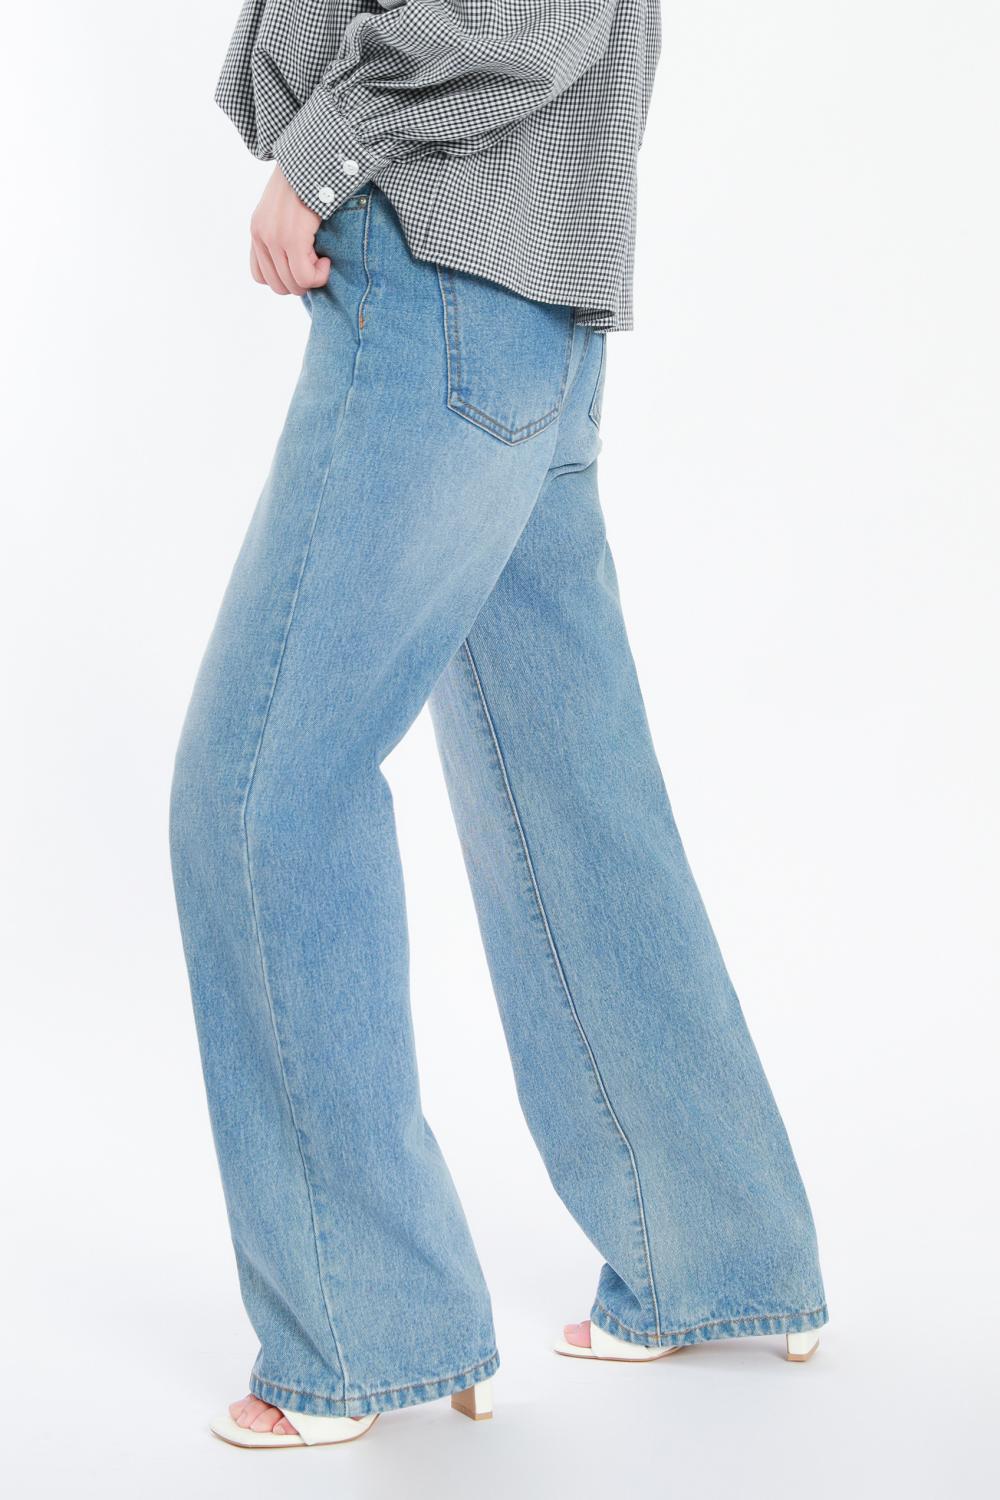 Hellblaue schlanke Fit -Jeans